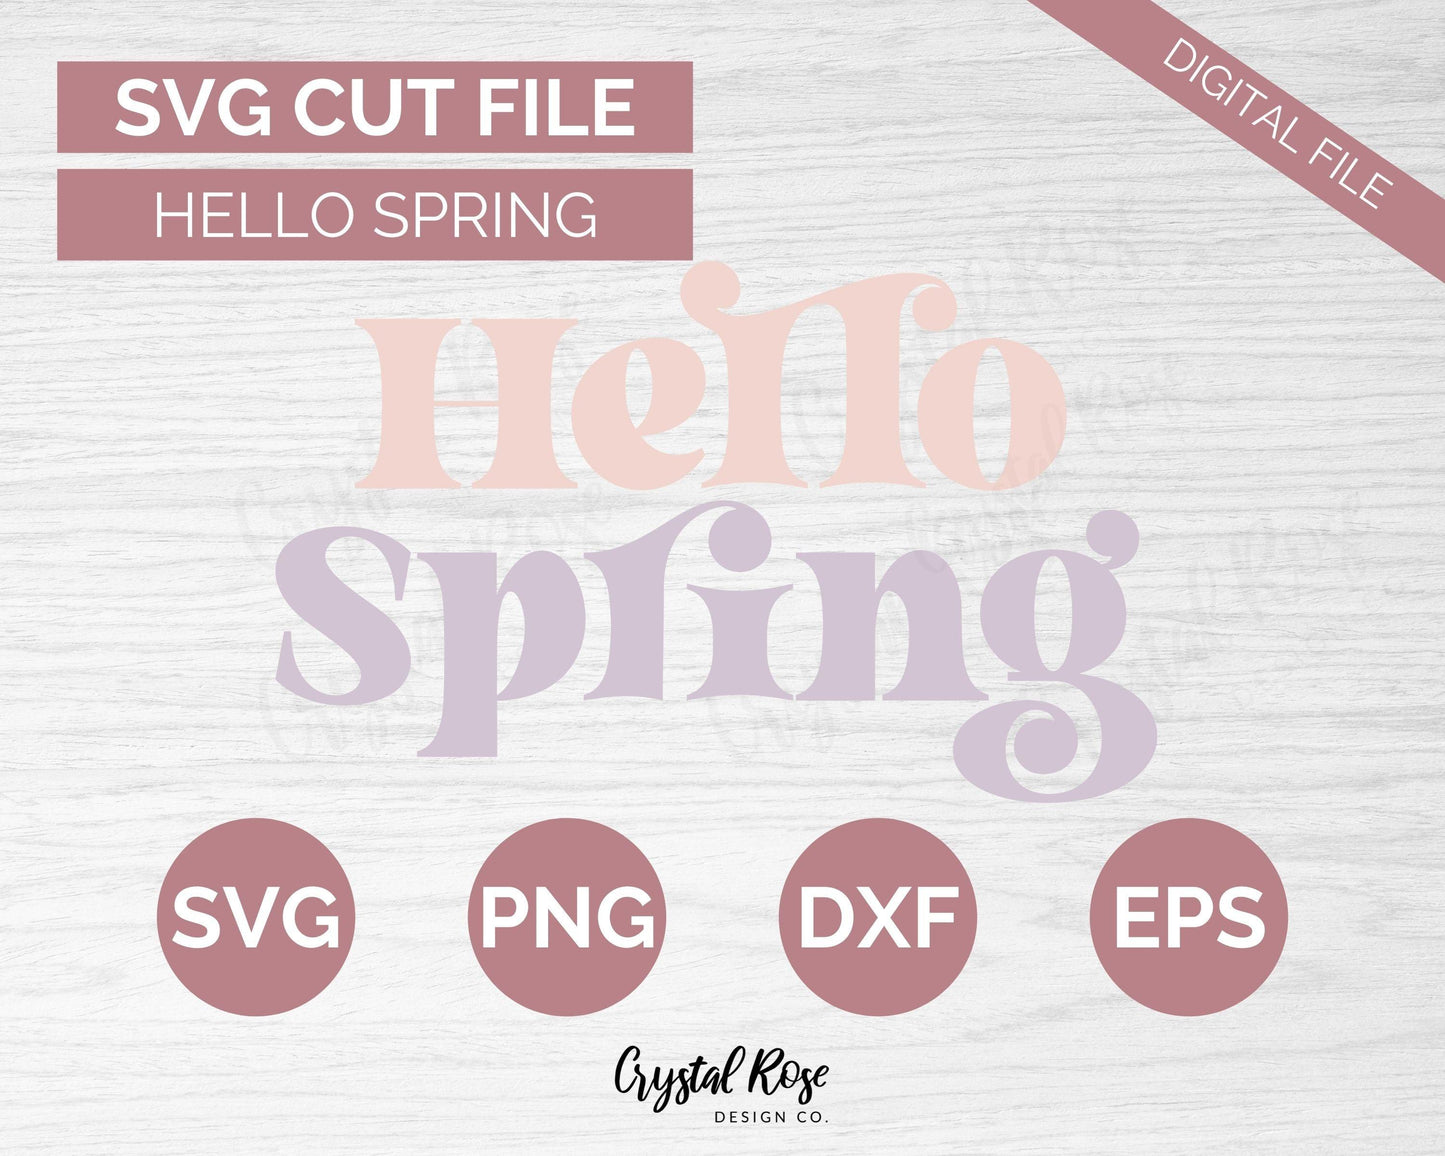 Hello Spring SVG, Easter SVG, Digital Download, Cricut, Silhouette, Glowforge (includes svg/png/dxf/eps) - Crystal Rose Design Co.